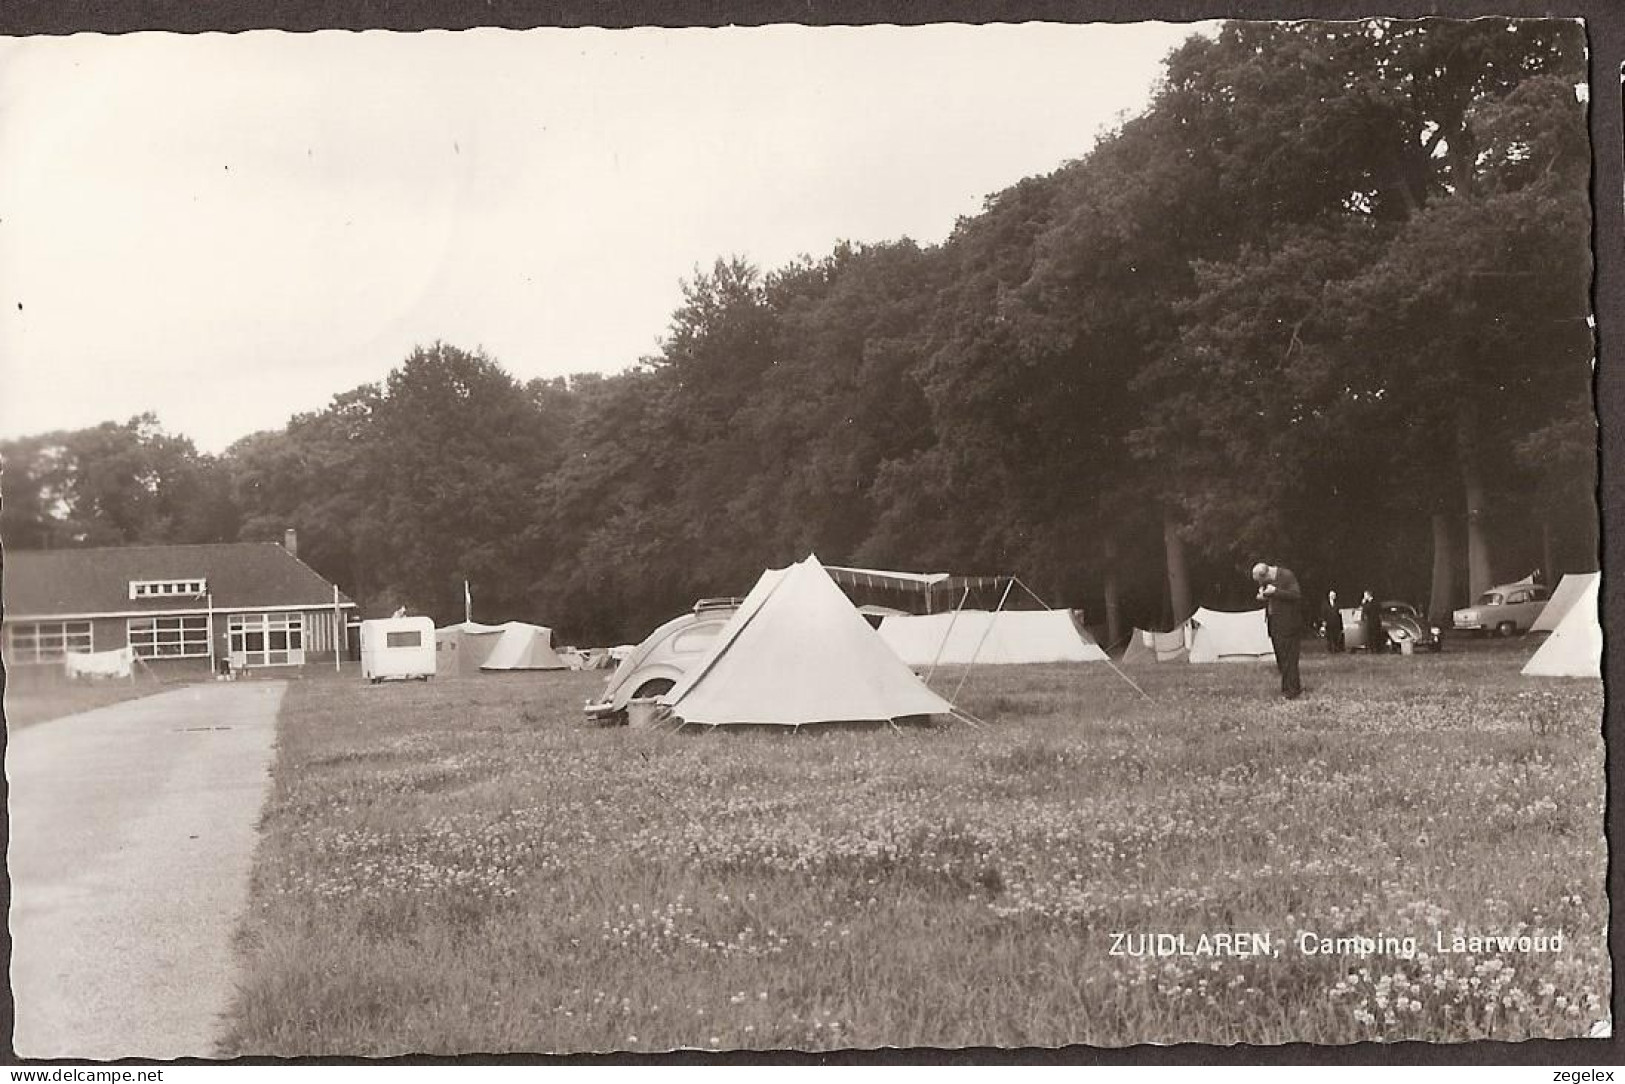 Zuidlaren - Camping Laarwoud -1964 - Zuidlaren